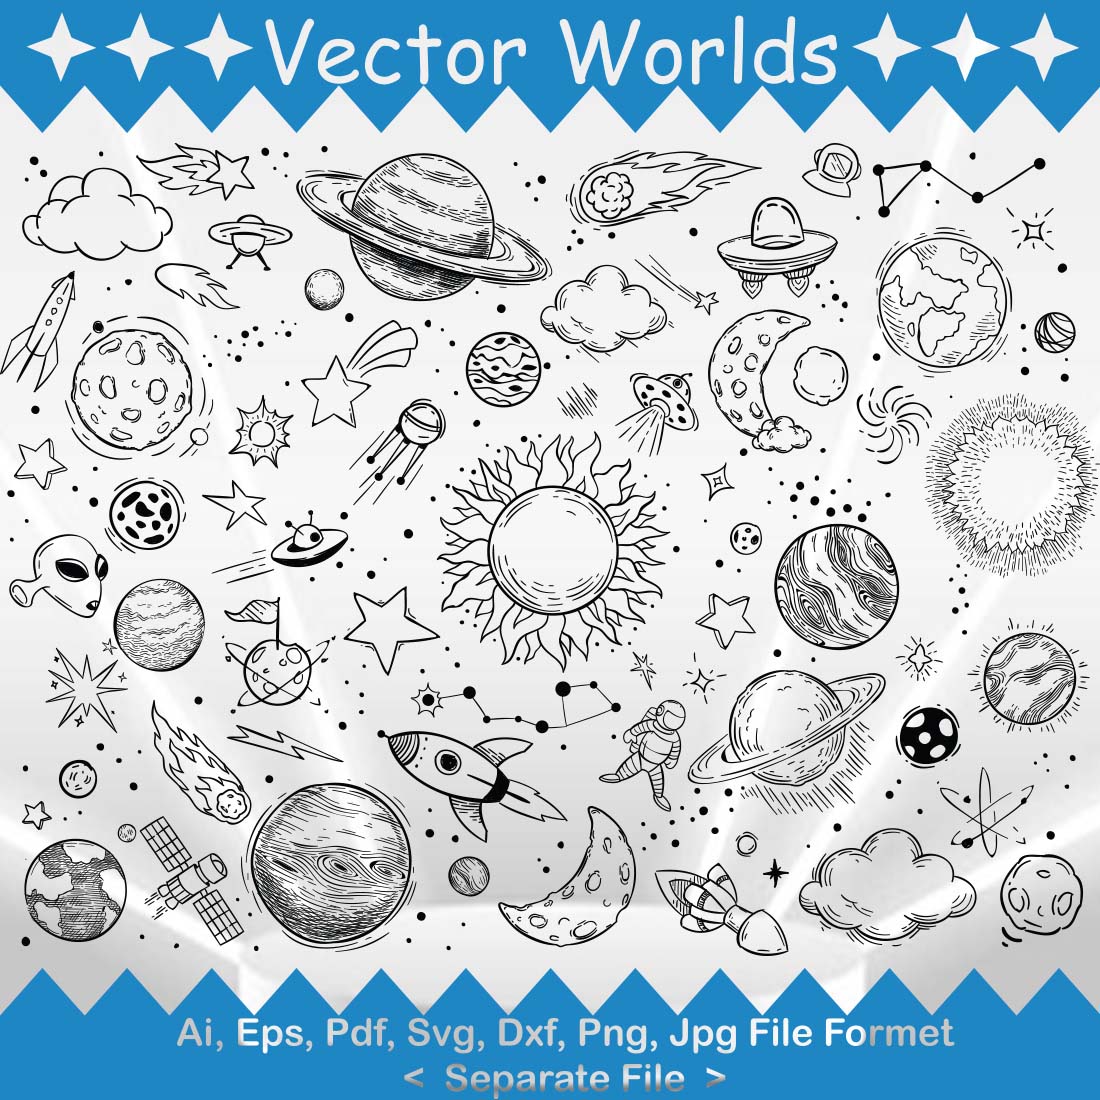 Galaxy SVG Vector Design cover image.